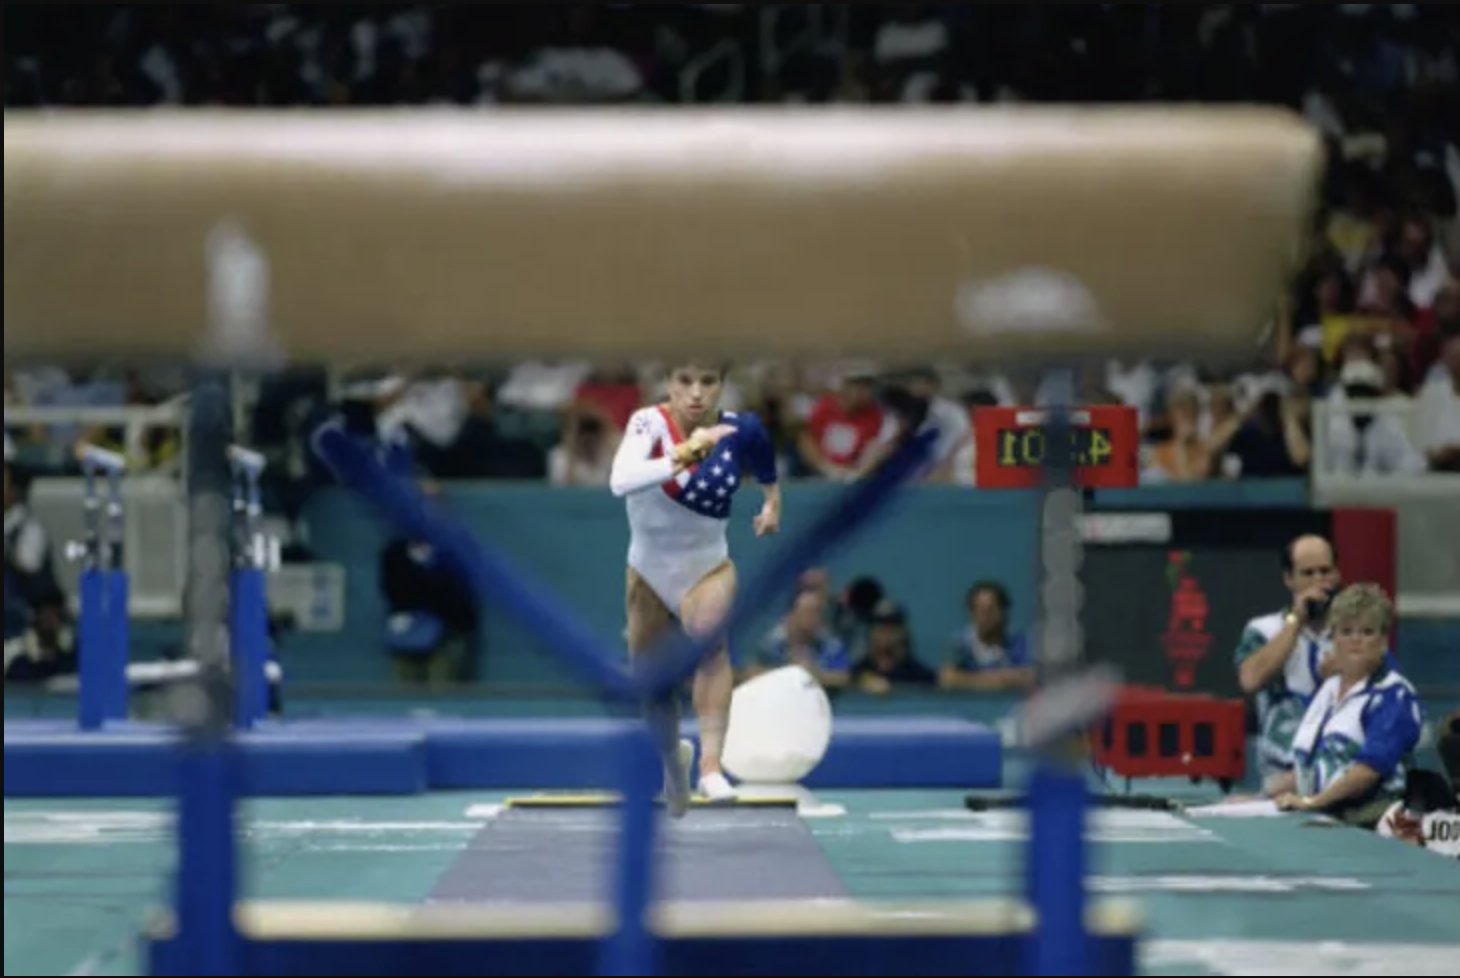 Keri Strug runs toward the vaulting horse at the 1996 Olympics in Atlanta